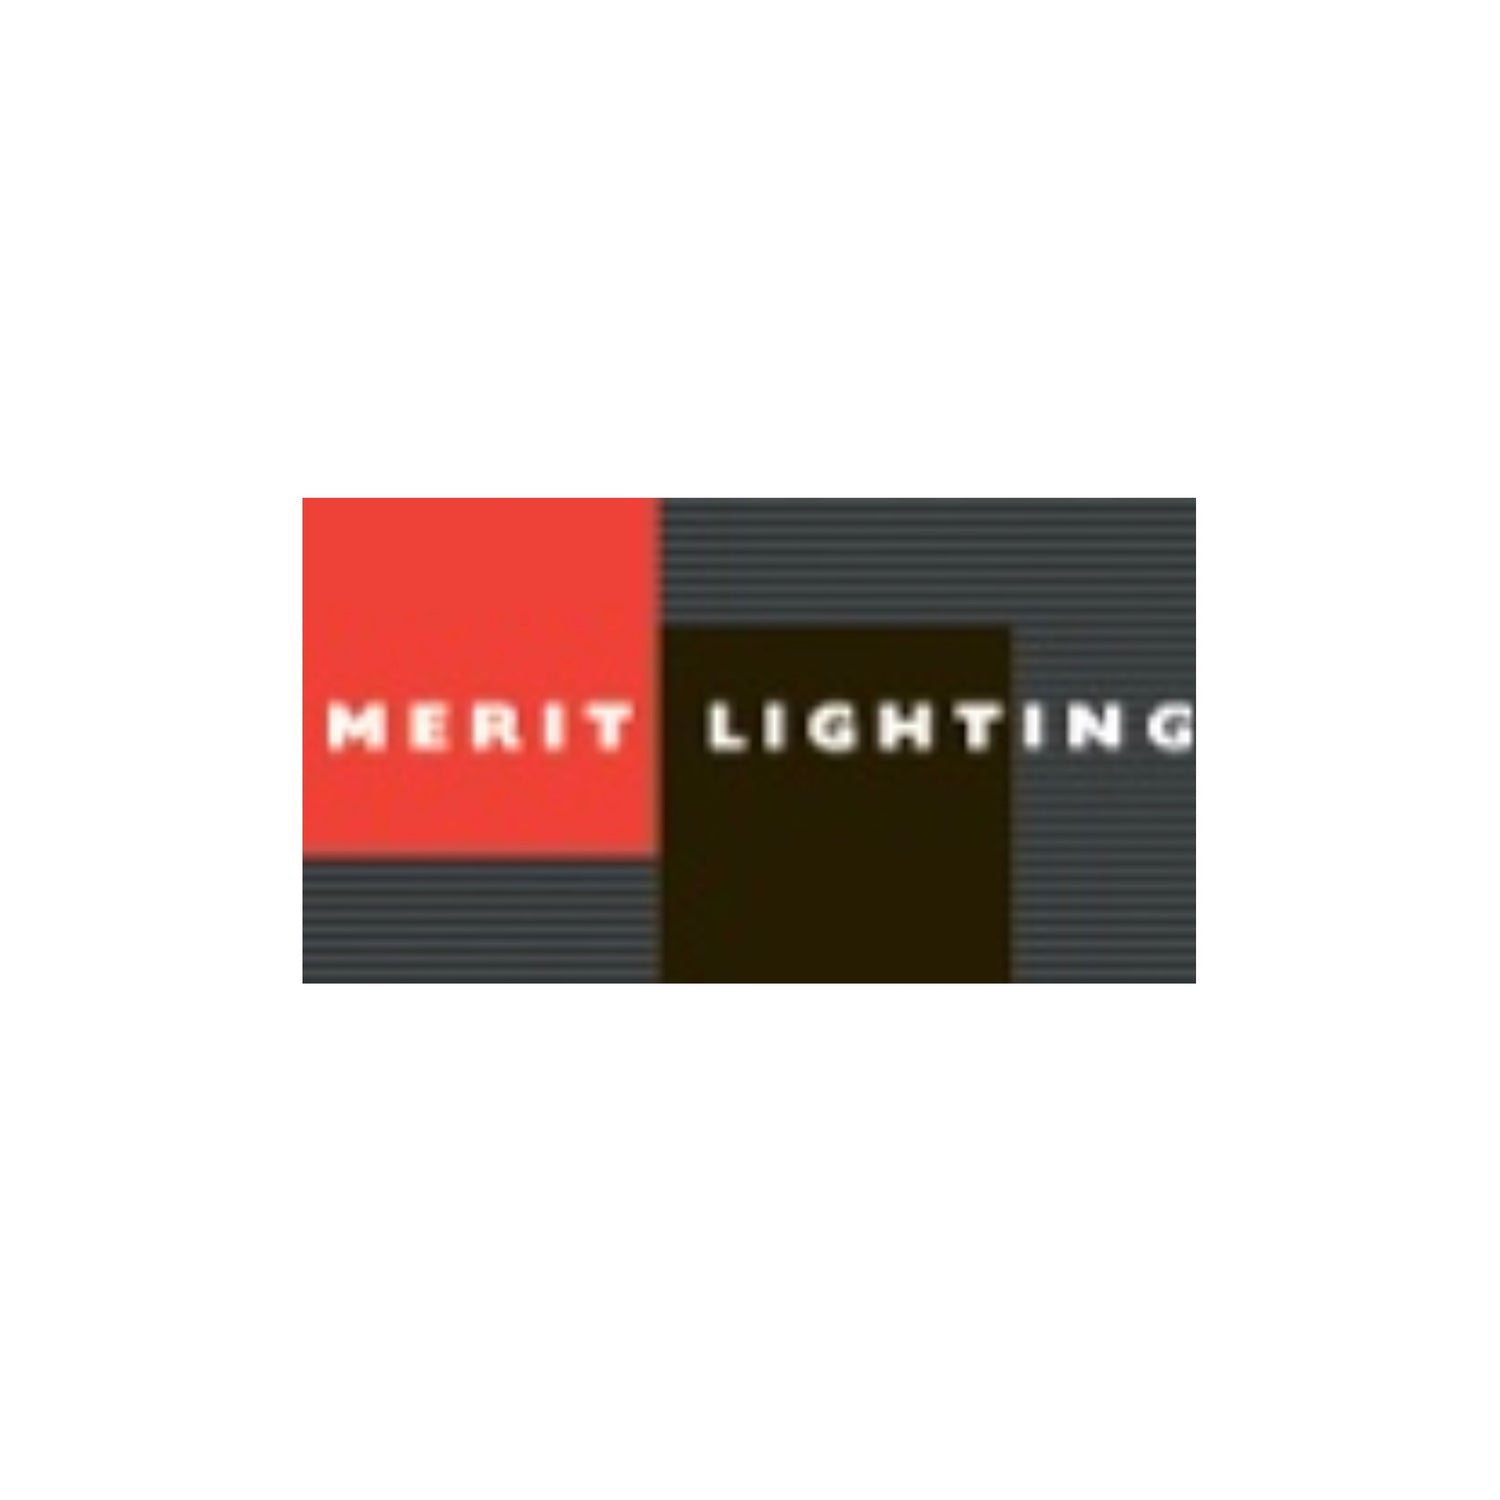 MERIT LIGHTING LLC